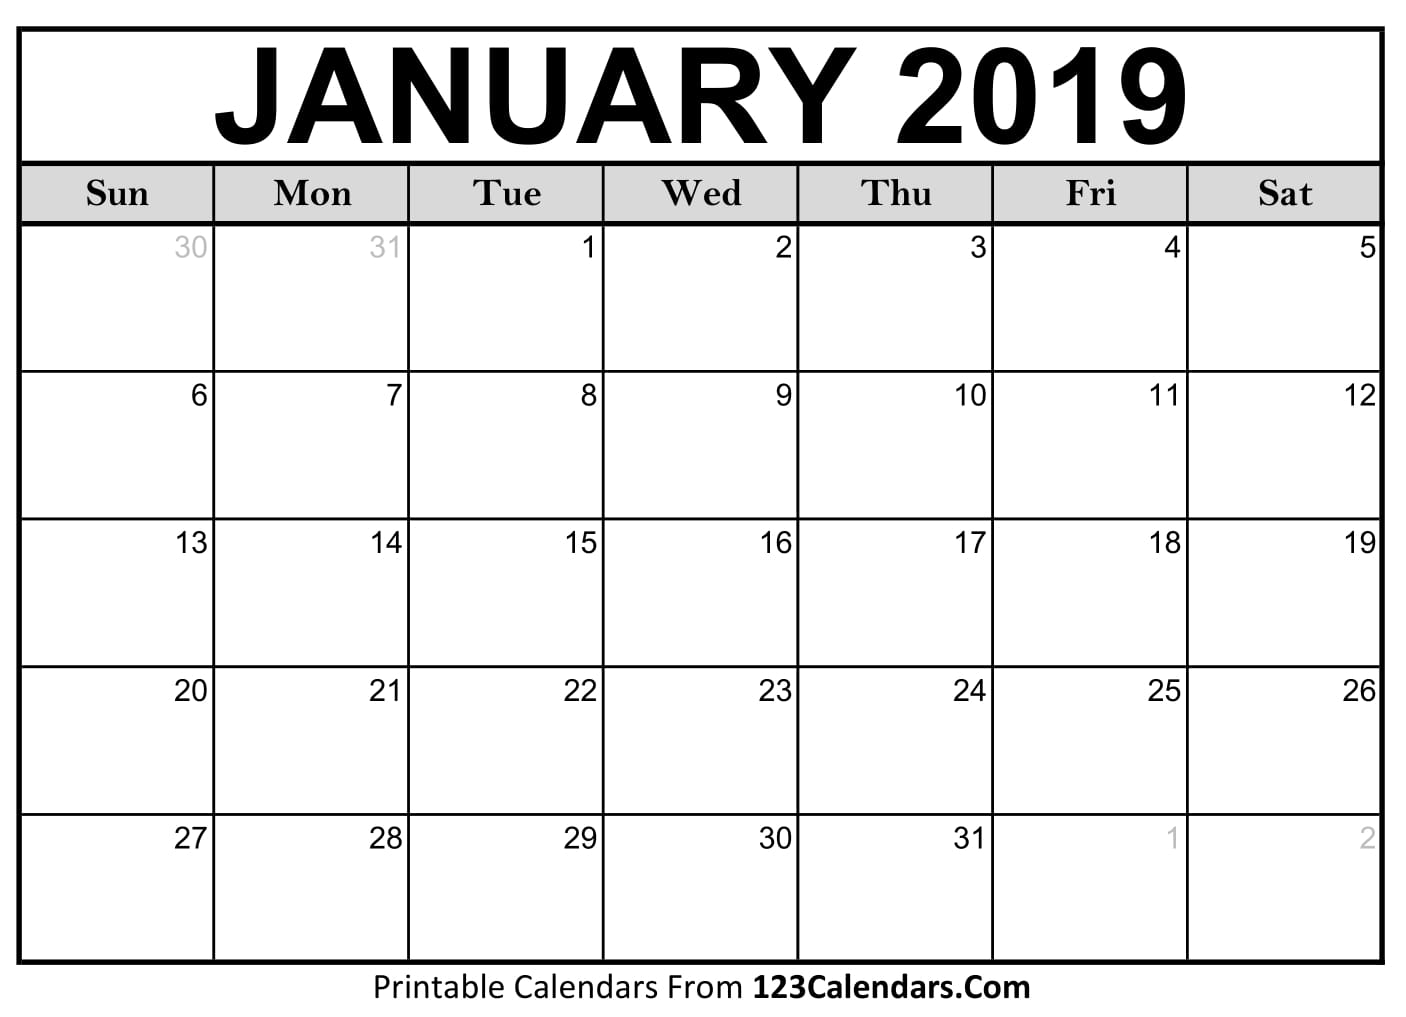 2019-calendar-excel-templates-printable-pdfs-images-exceldatapro